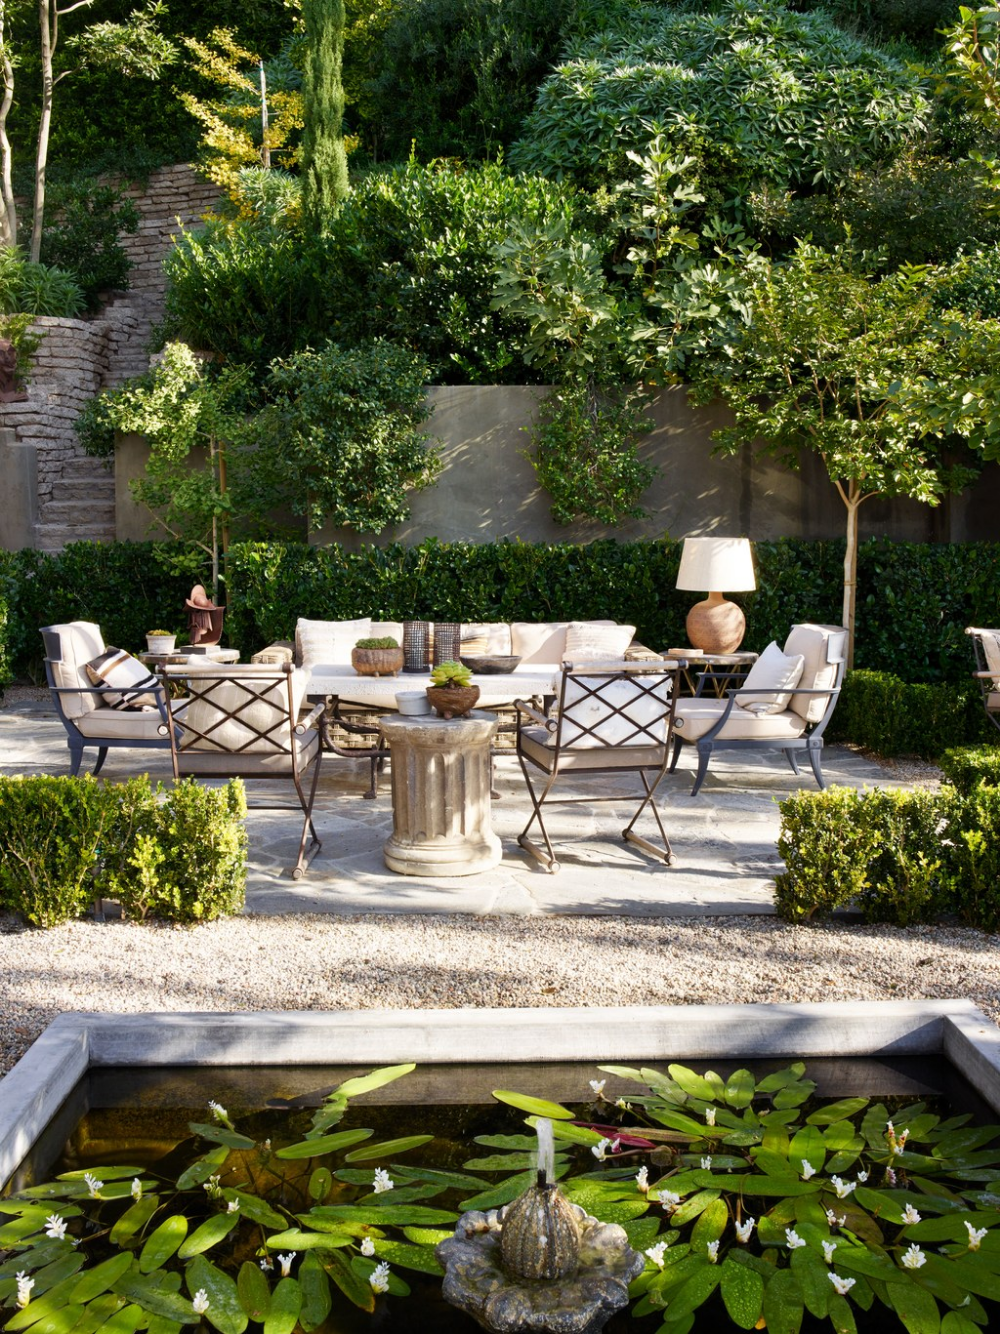 15 garden design Roof spaces ideas